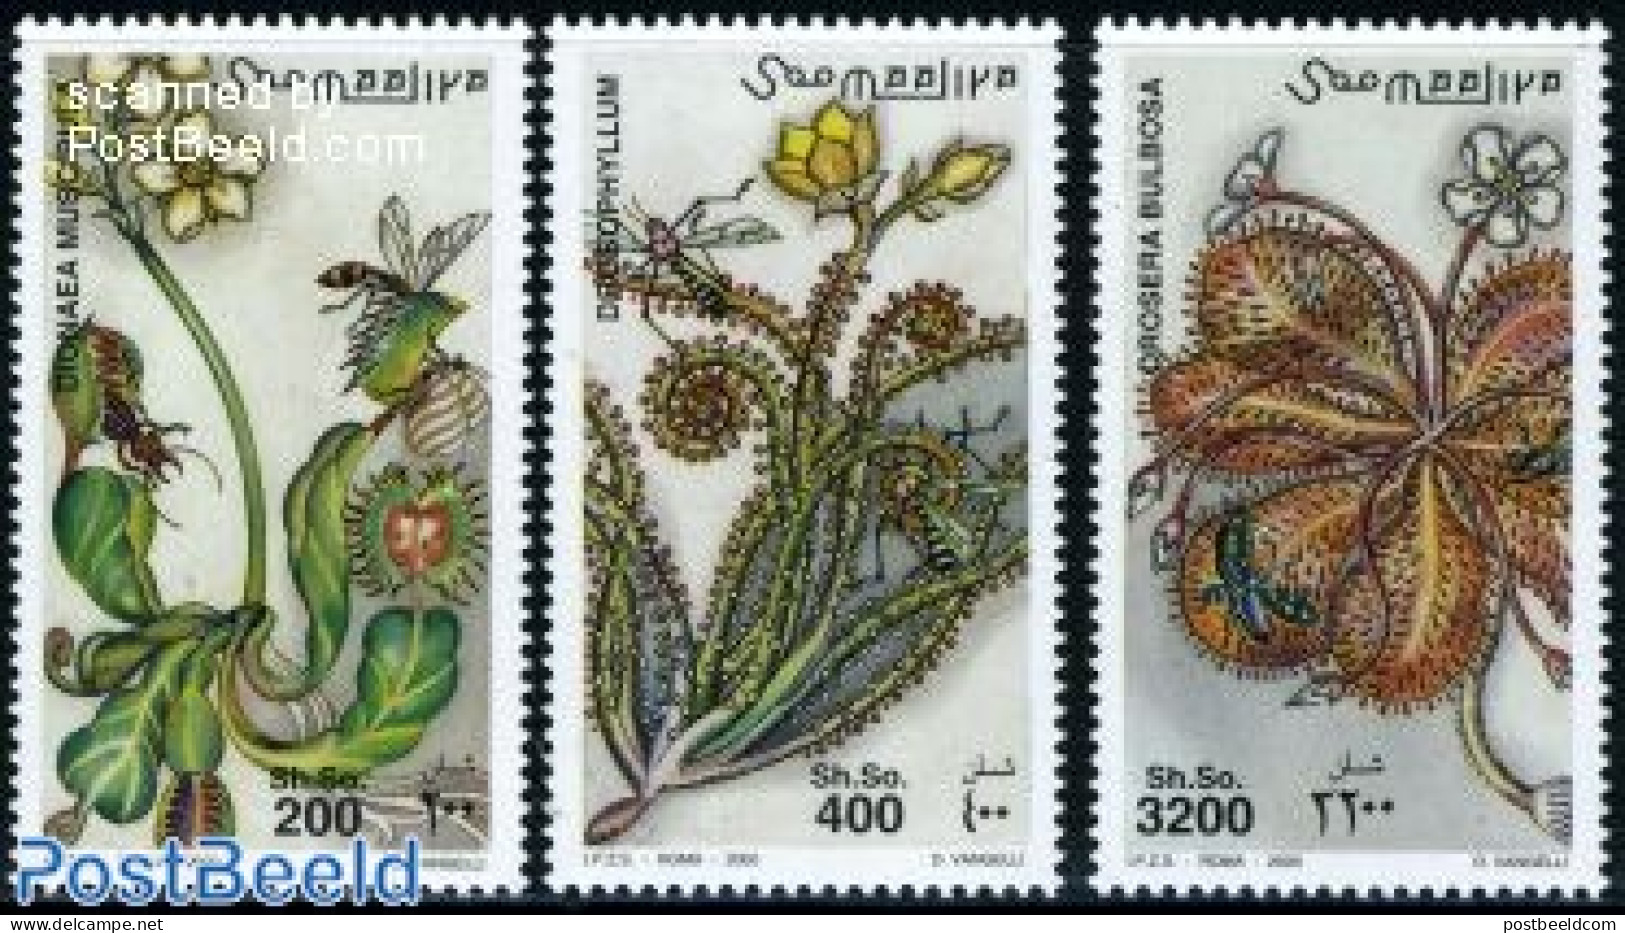 Somalia 2000 Carnifor Plants 3v, Mint NH, Nature - Flowers & Plants - Somalie (1960-...)